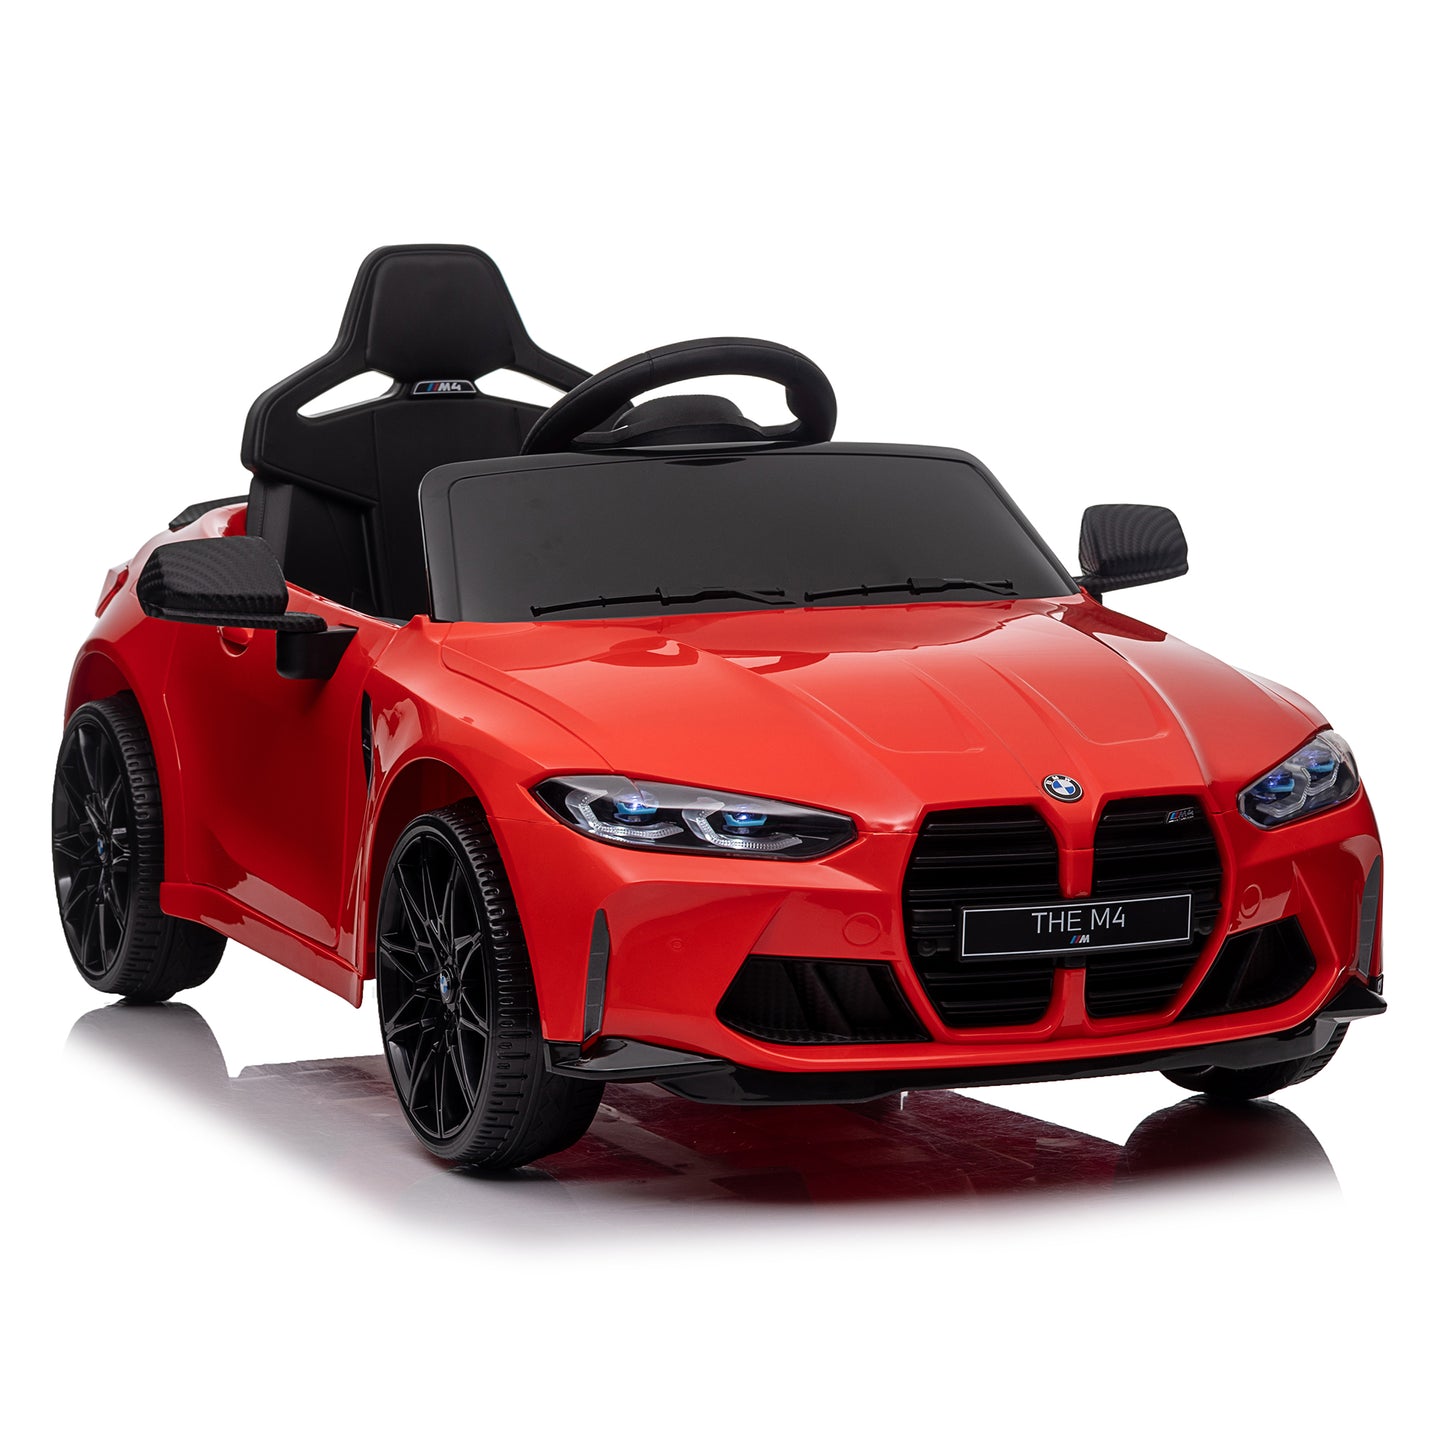 BMW M4 12v Kids ride on toy car 2.4G W/Parents Remote Control Three speed adjustable